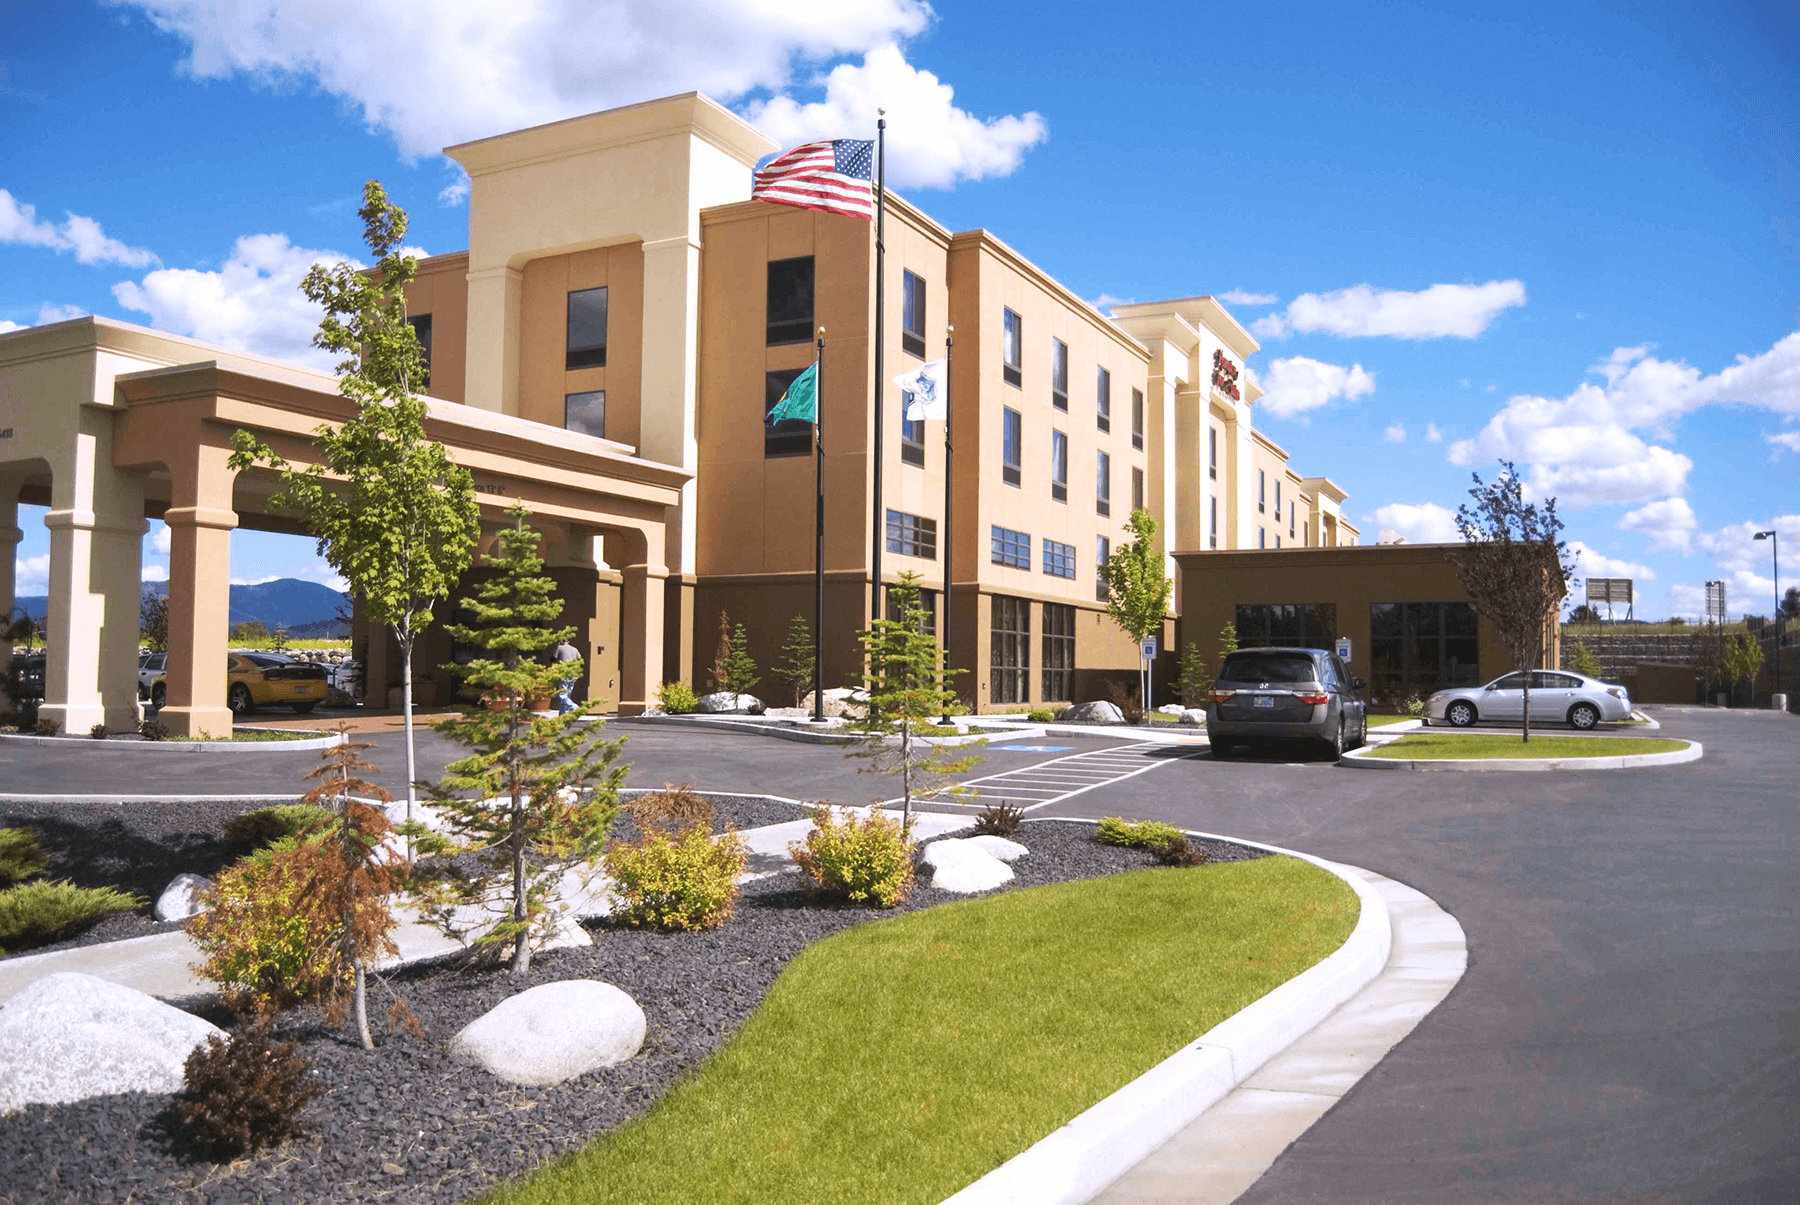  Hampton Inn and Suites Spokane exterior and parking lot 